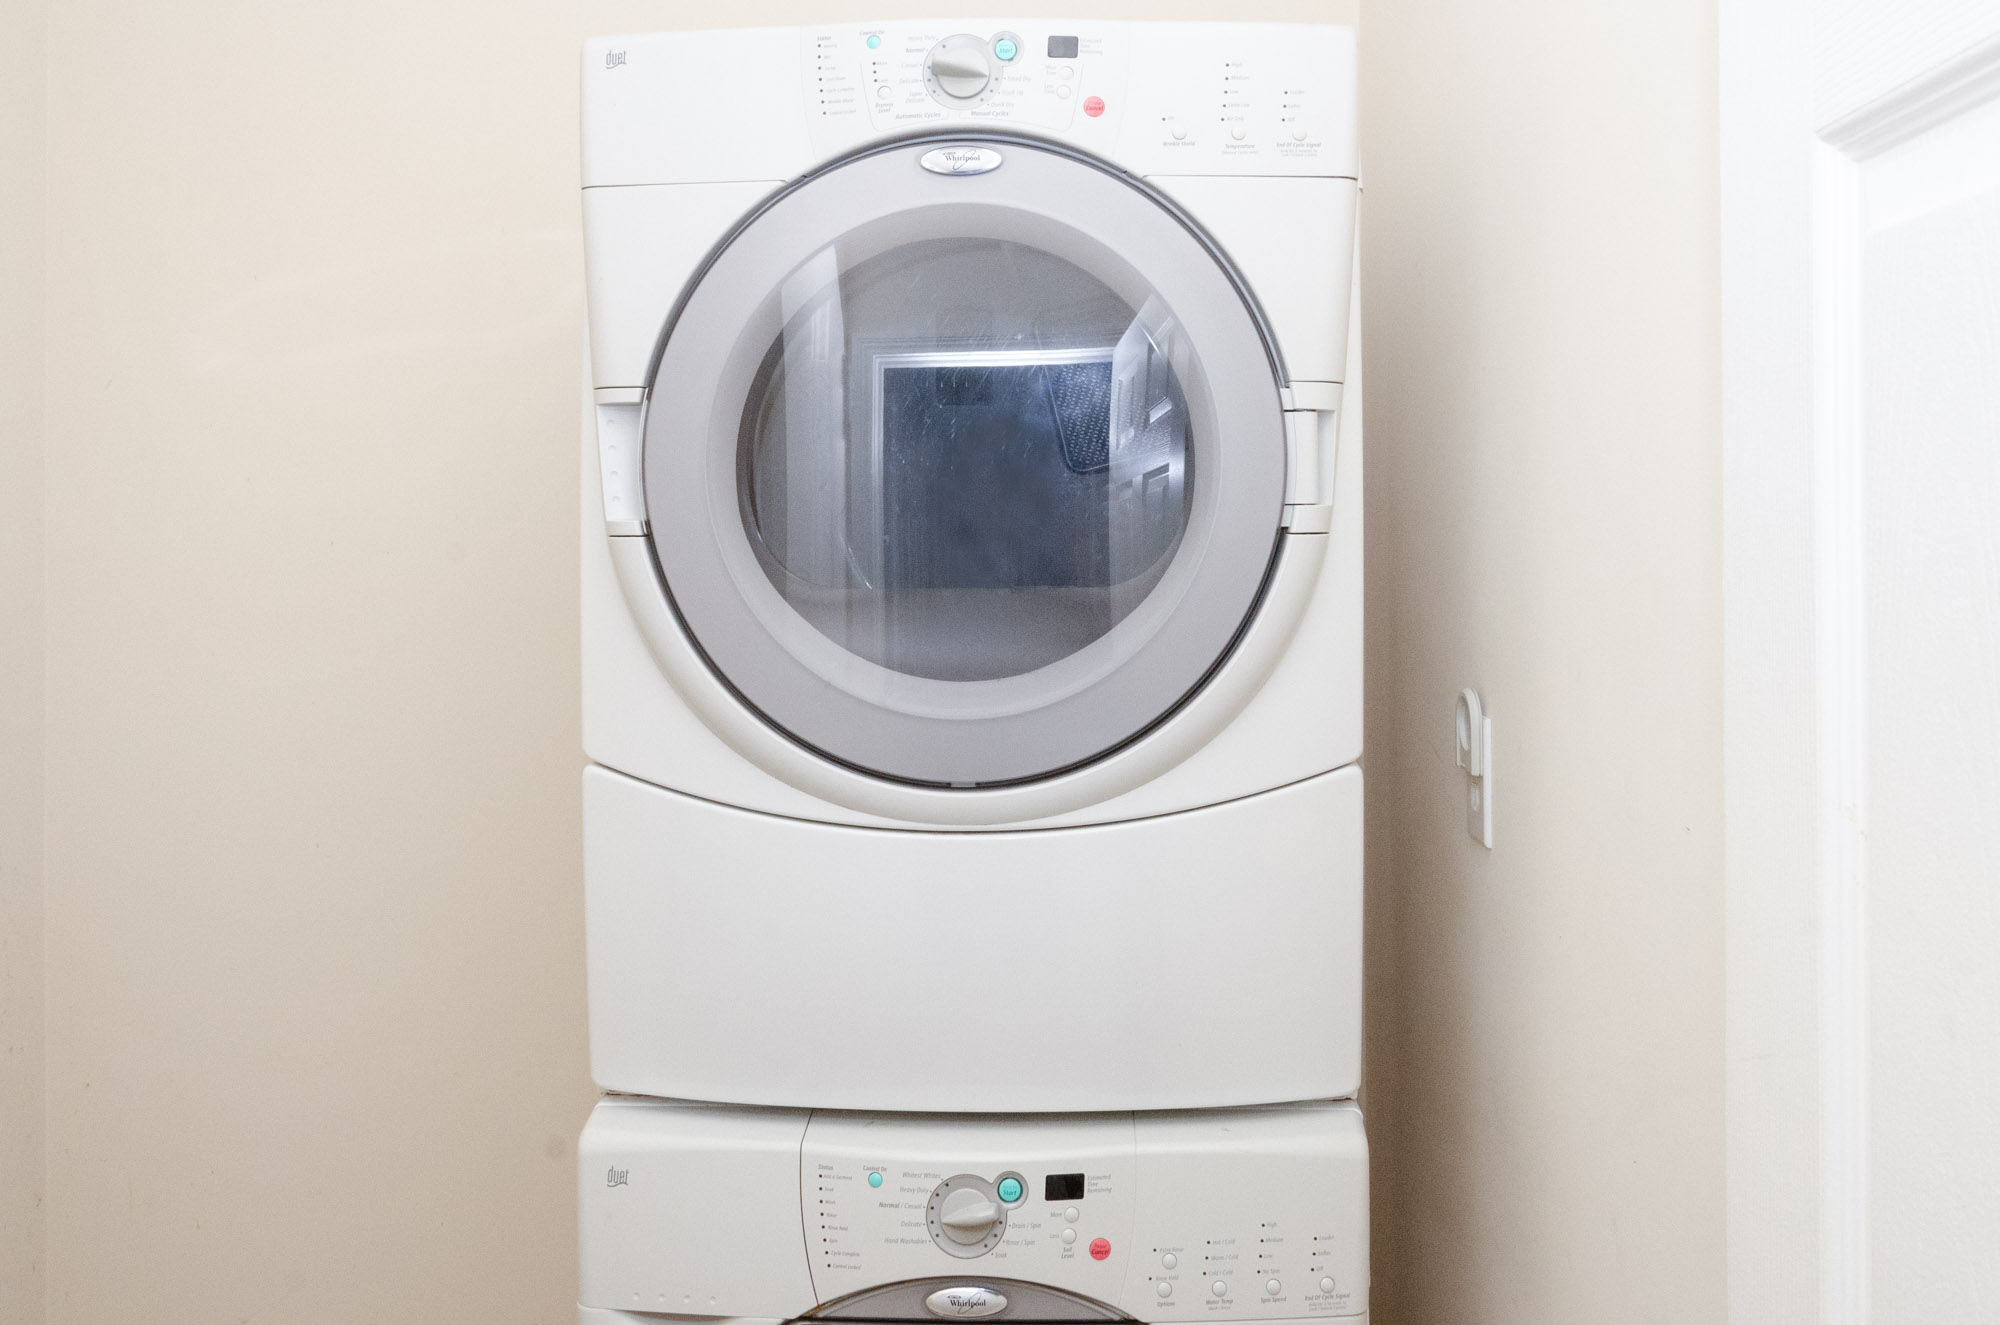 whirlpool washing machine serial number etw4400xq0 tub size